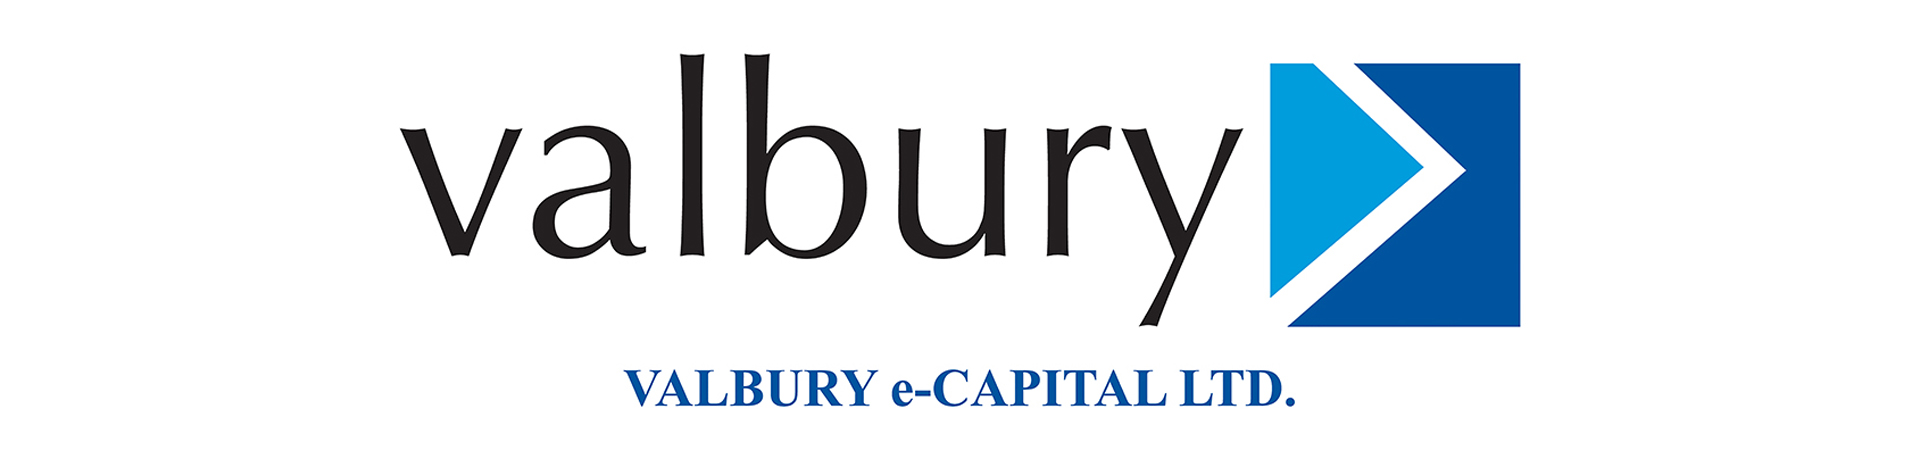 Valbury e-Capital Limited